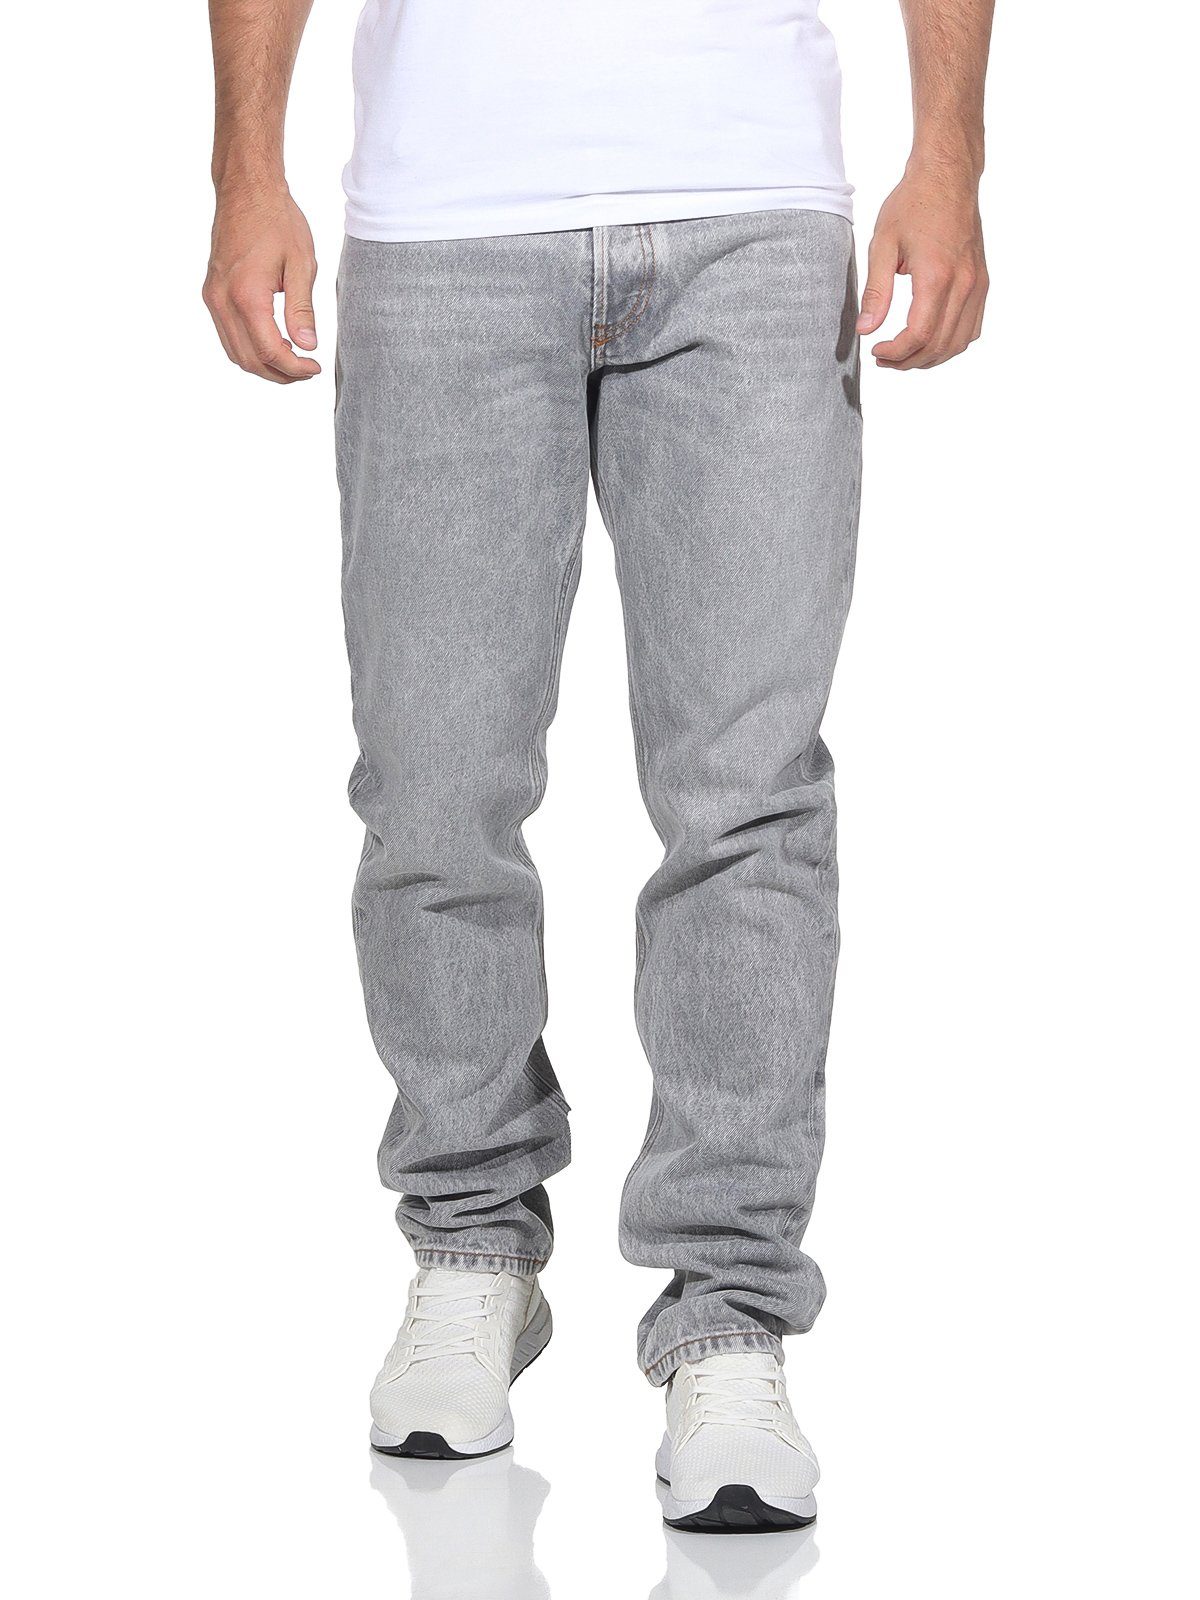 - Style, D-SARK Herren, Diesel Slim Grau, Herren 007D4 Dezenter MID Straight Jeans Diesel Leg Meliert, Used-Look, Gerade 5 Jeans Waist fit, - Pocket